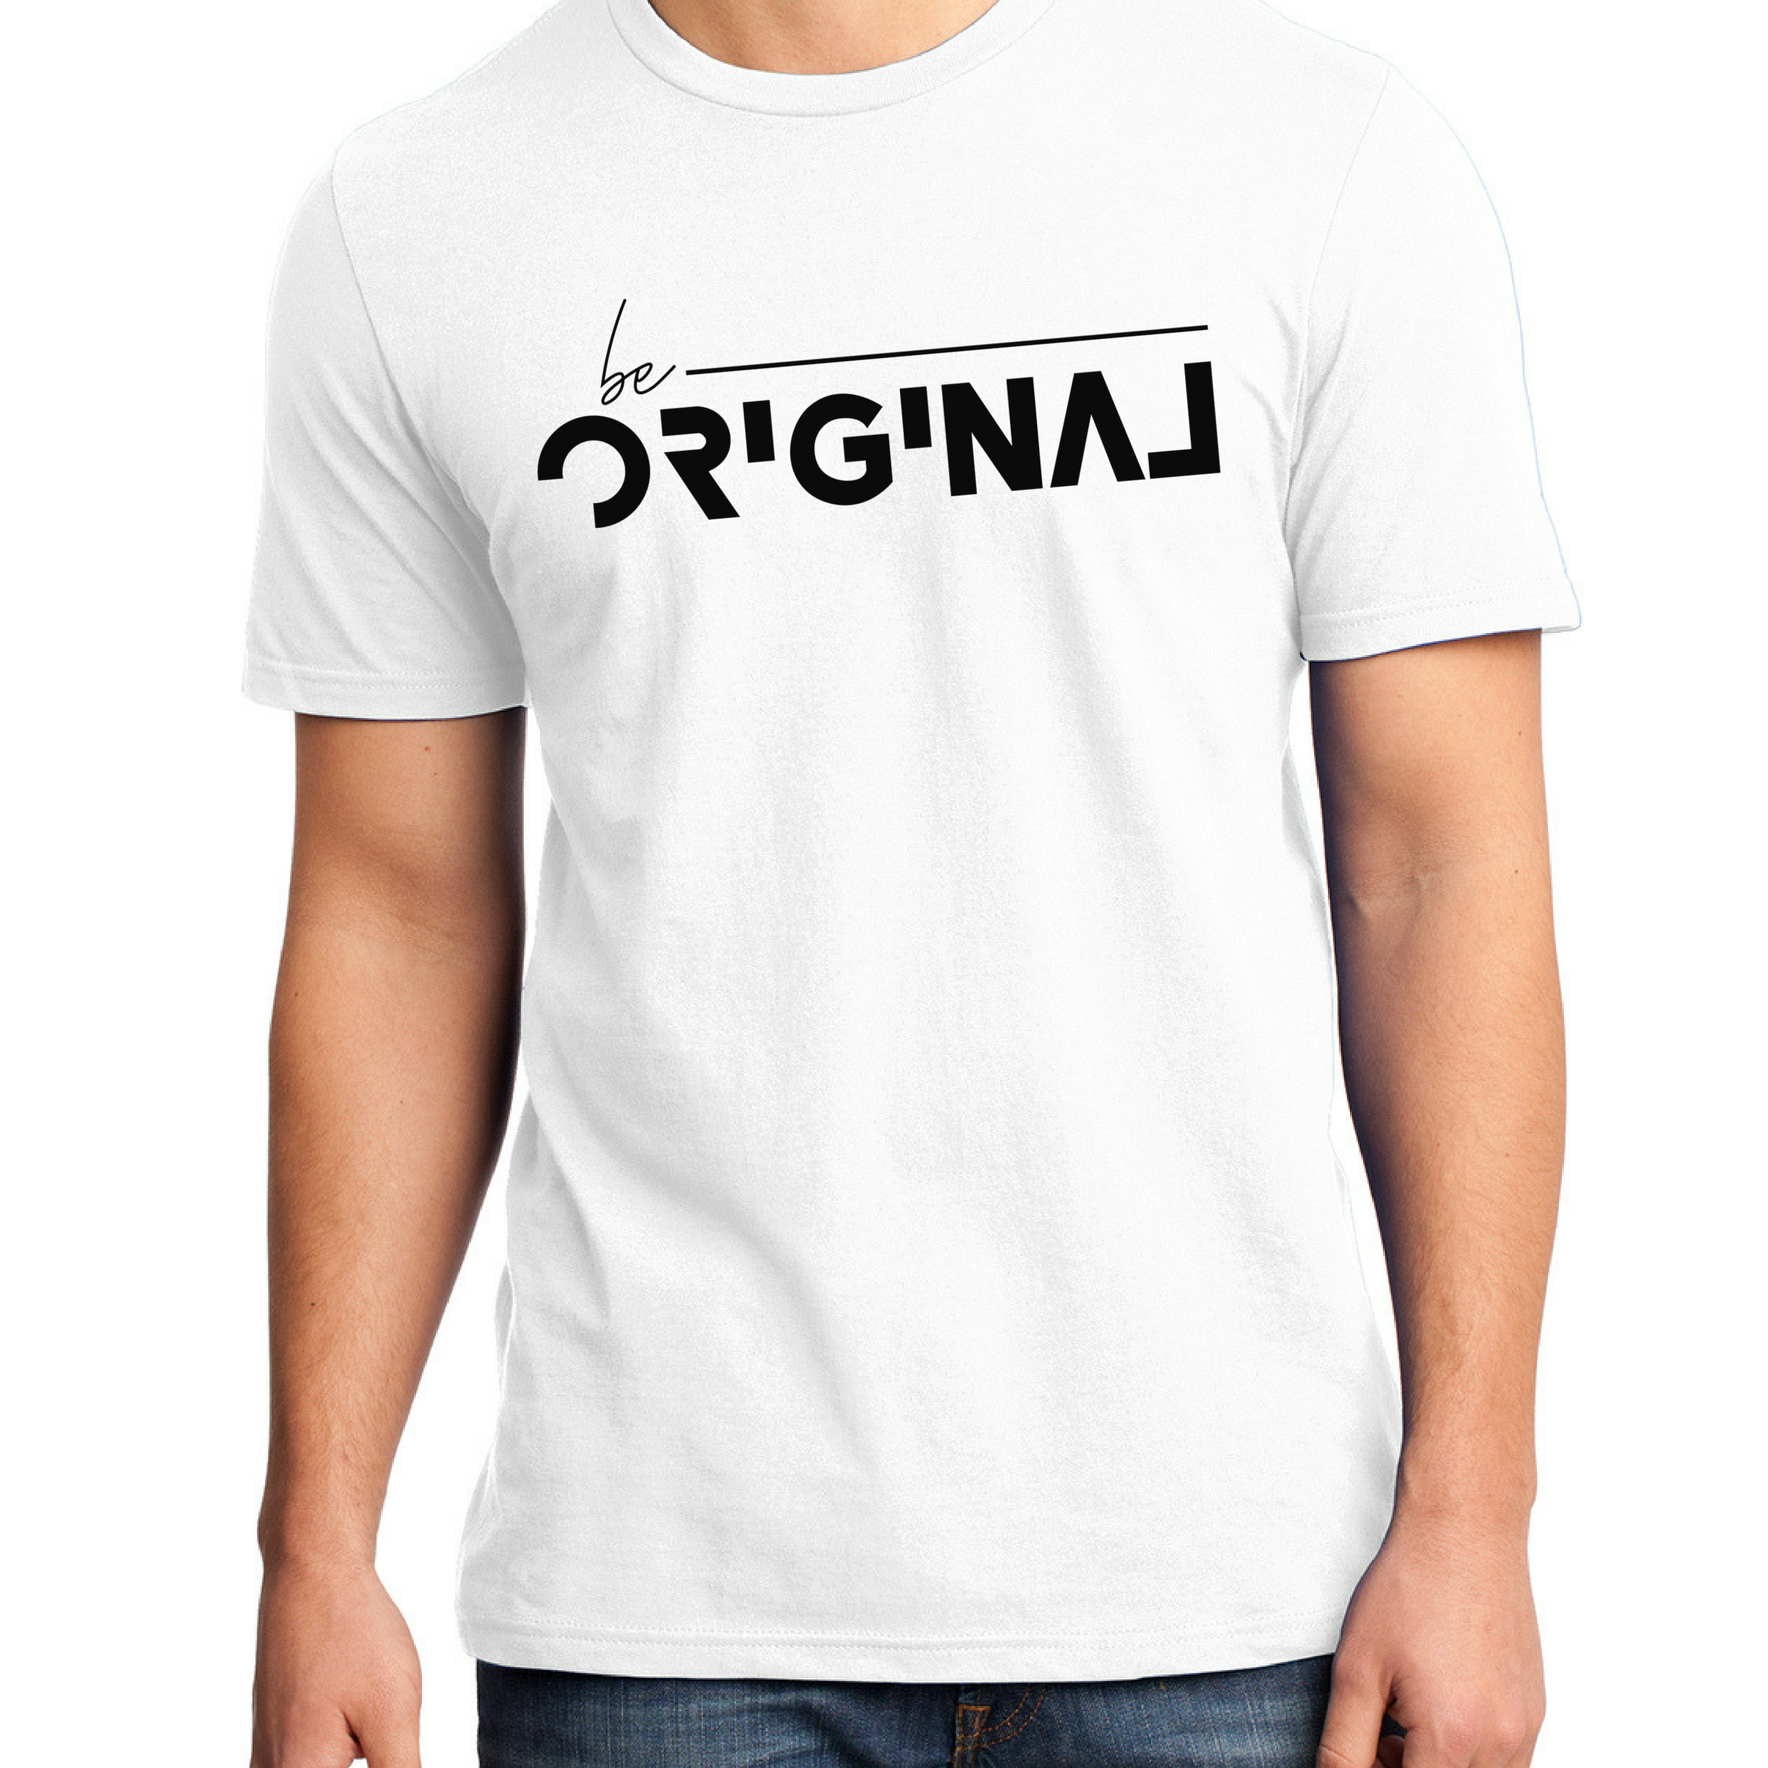 Be Original Reactr Tshirts For Men - Eyewearlabs